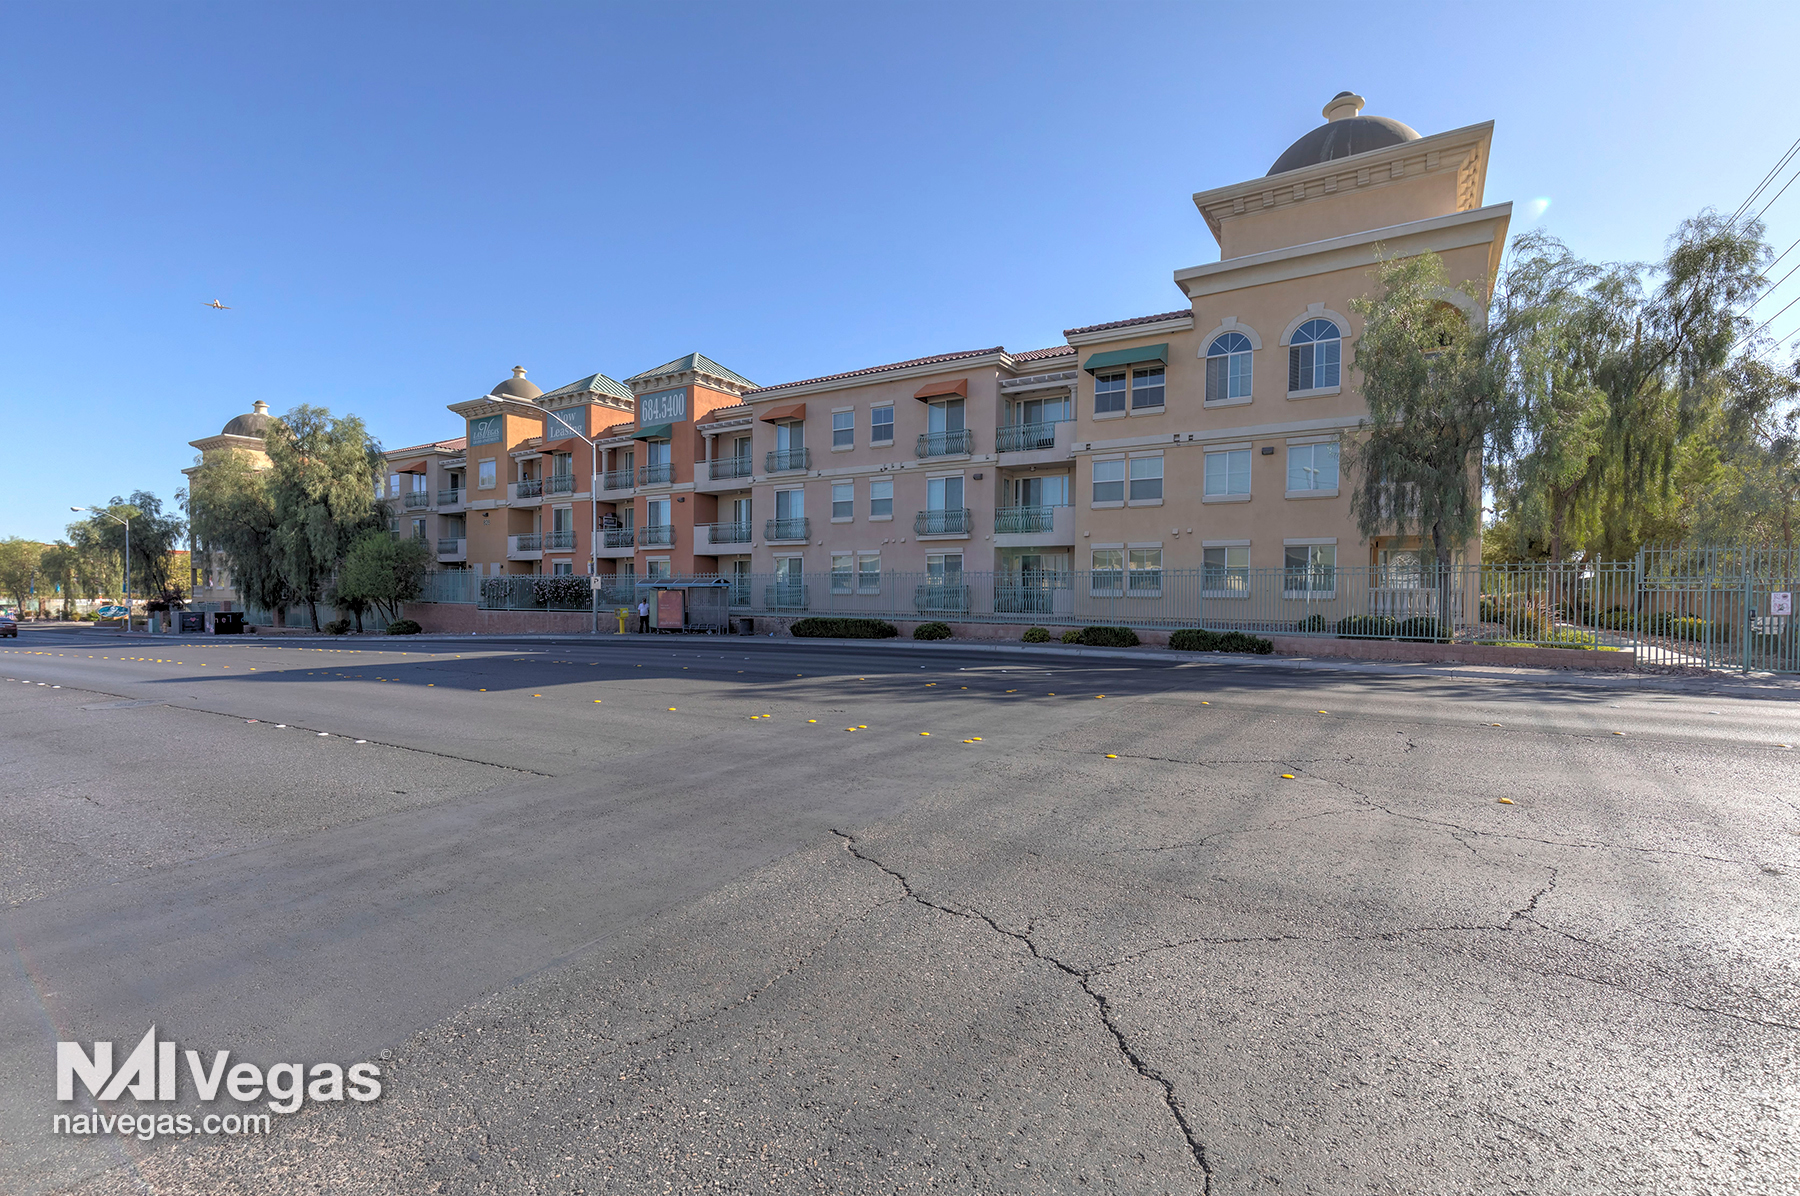 Las Vegas Grand Apartments' parking lot and building